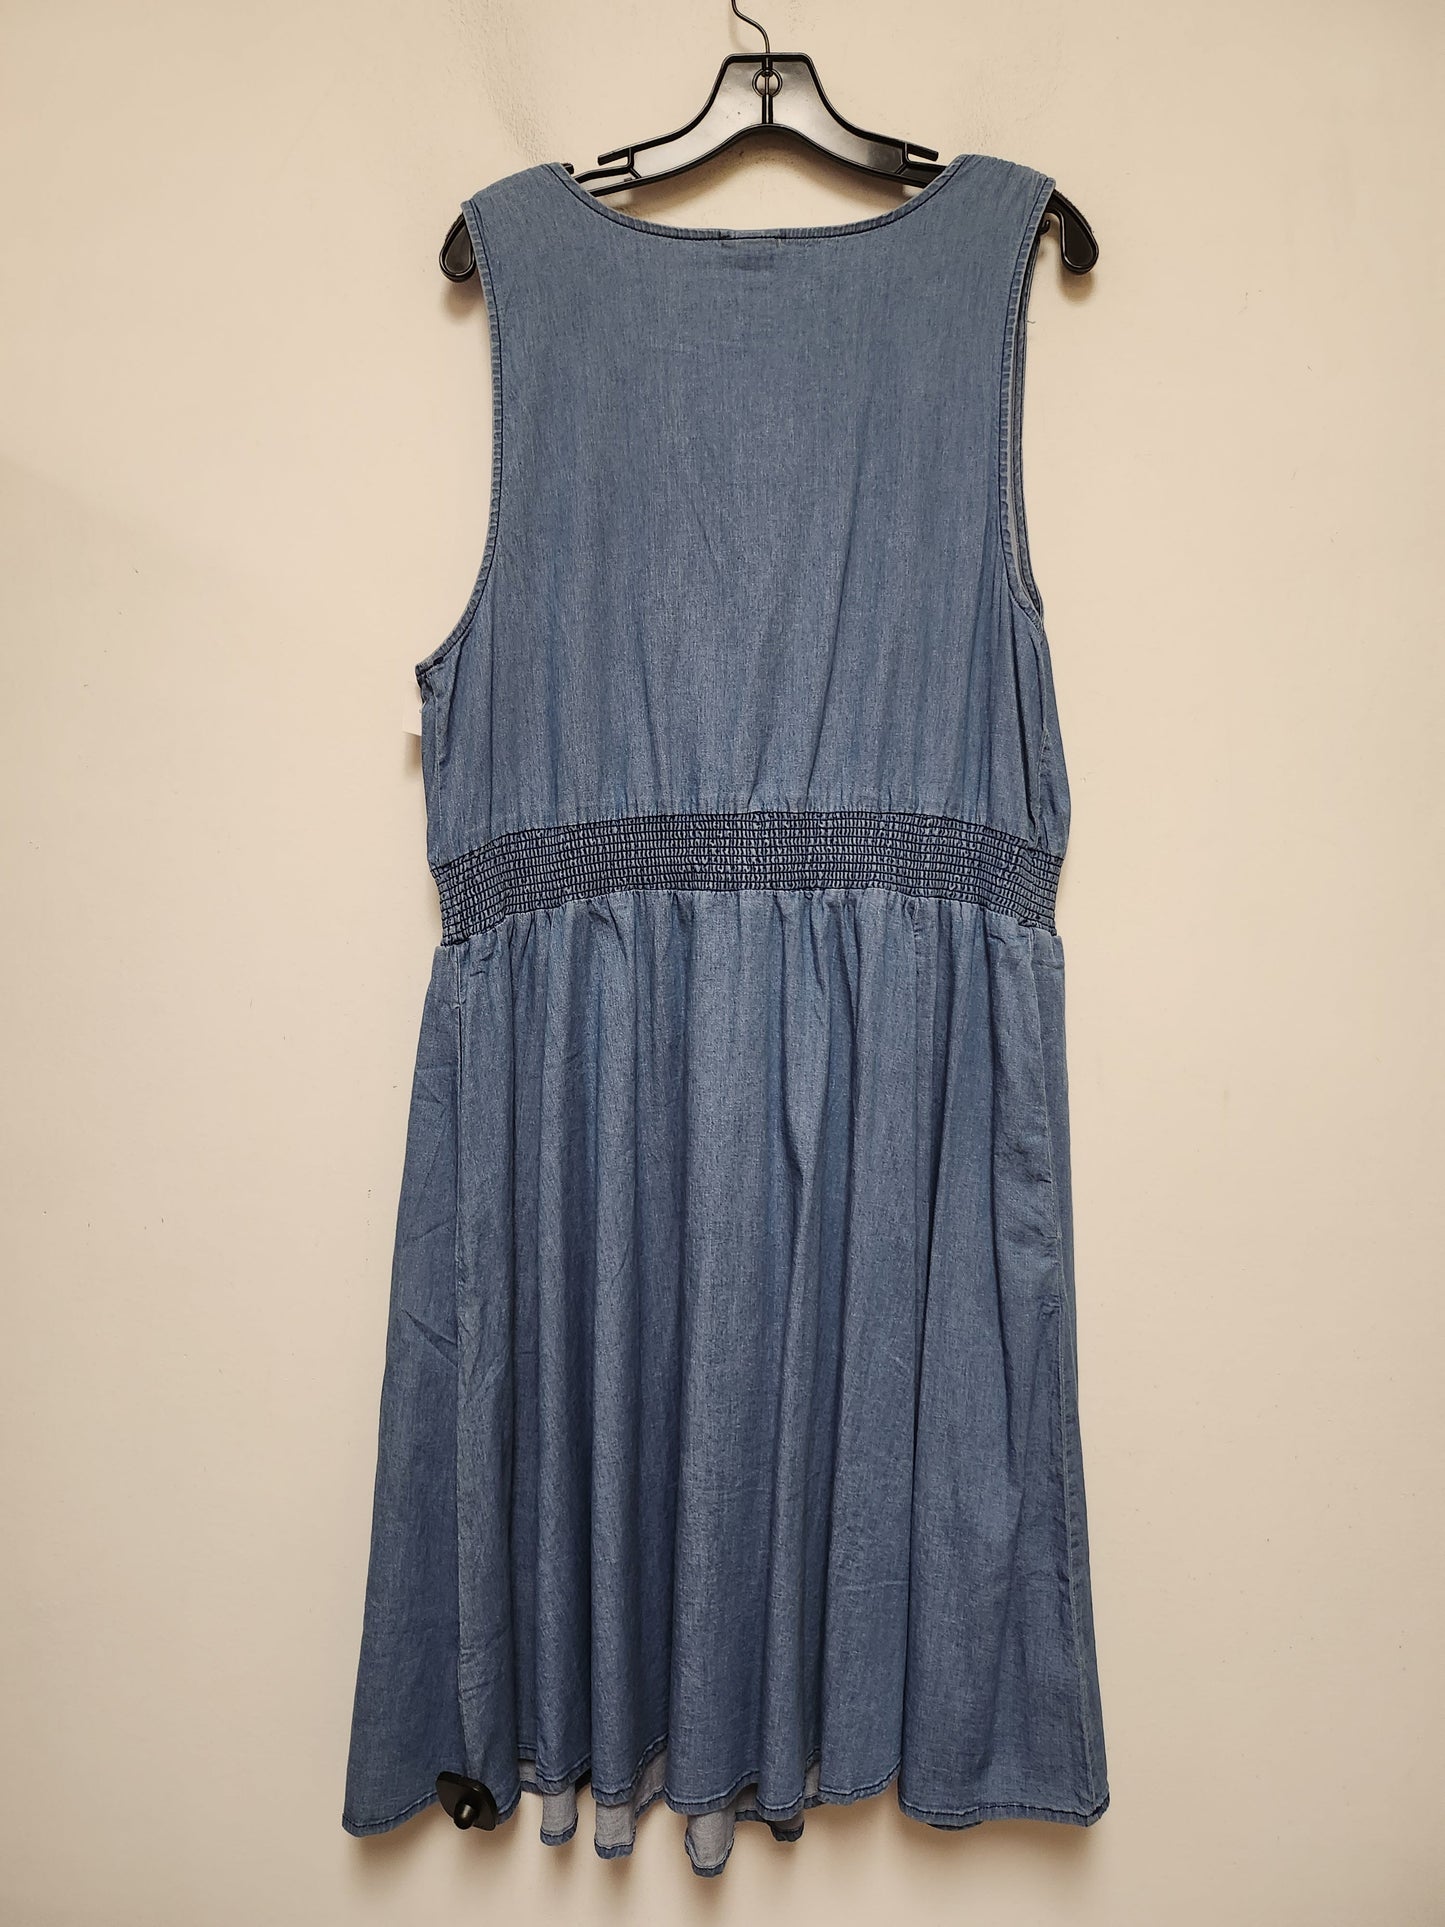 Blue Denim Dress Casual Midi Clothes Mentor, Size 2x